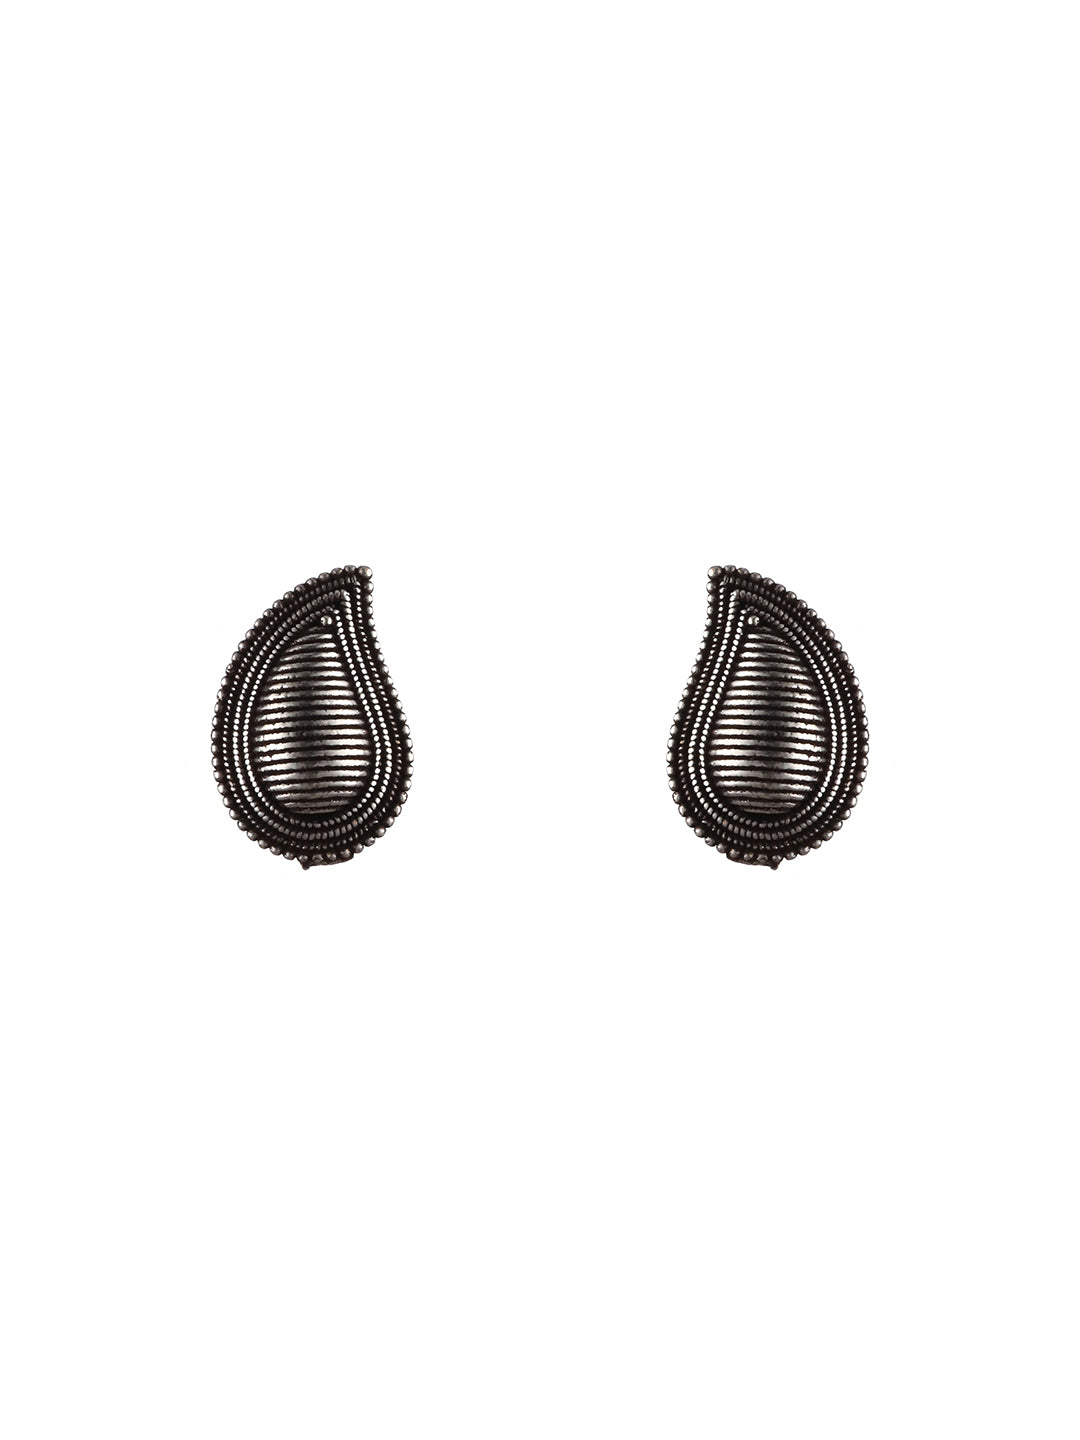 Oxidised Silver-Tone Black Stone Studded Jewellery Set - Jazzandsizzle